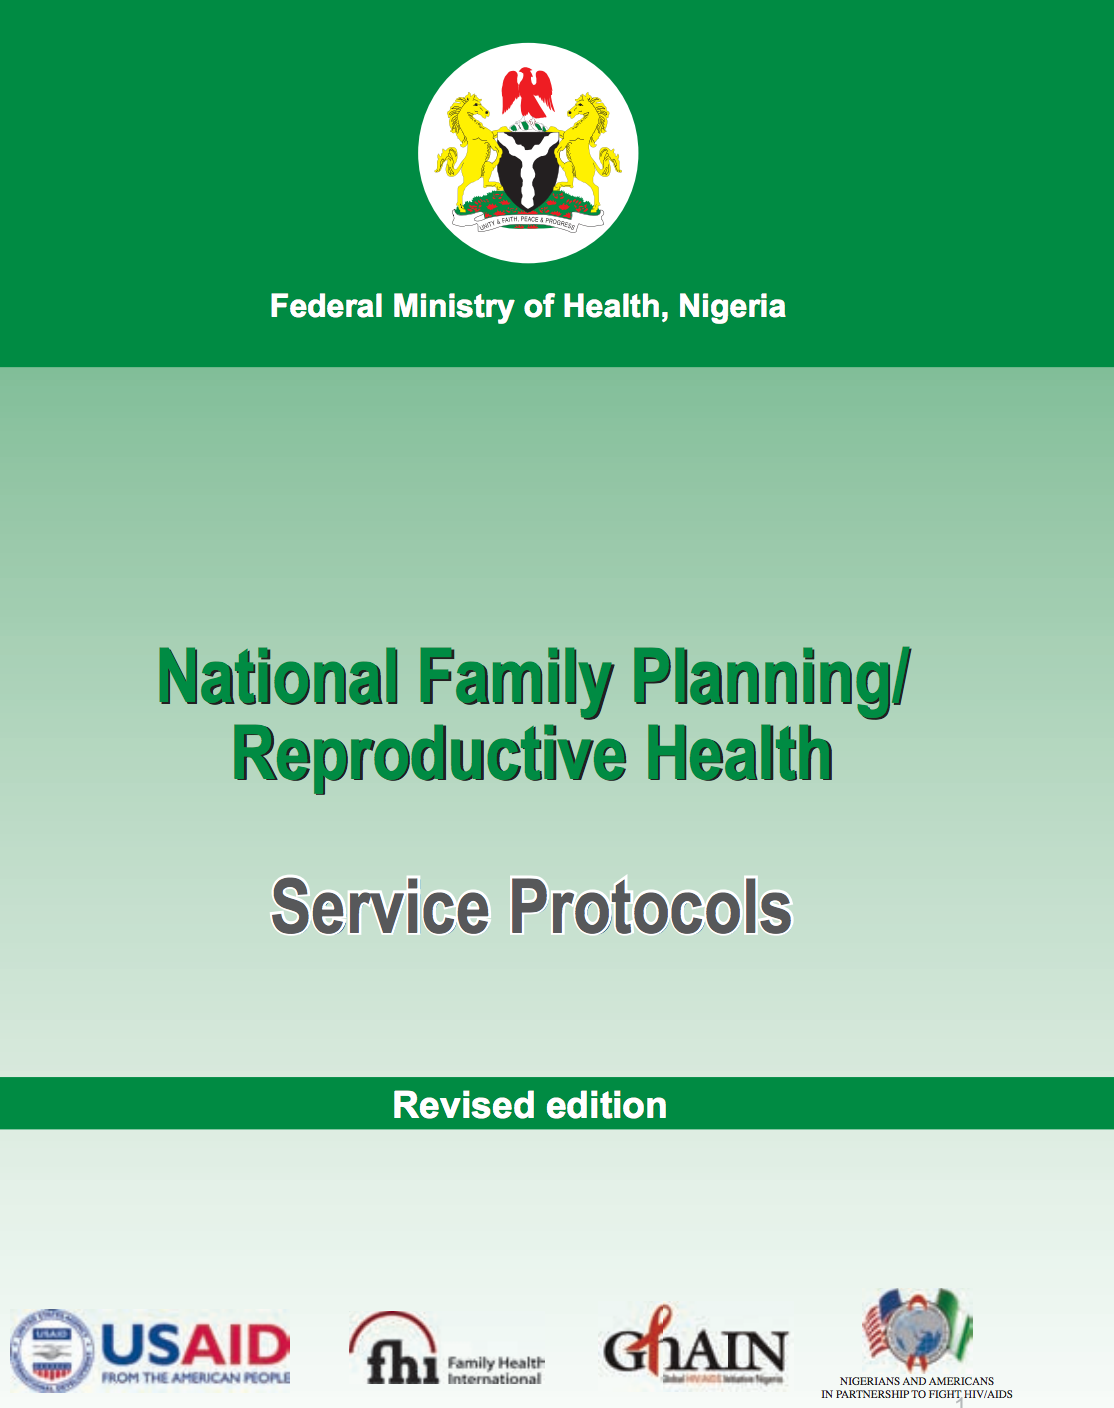 नाइजीरिया: राष्ट्रीय सेवा प्रोटोकॉल